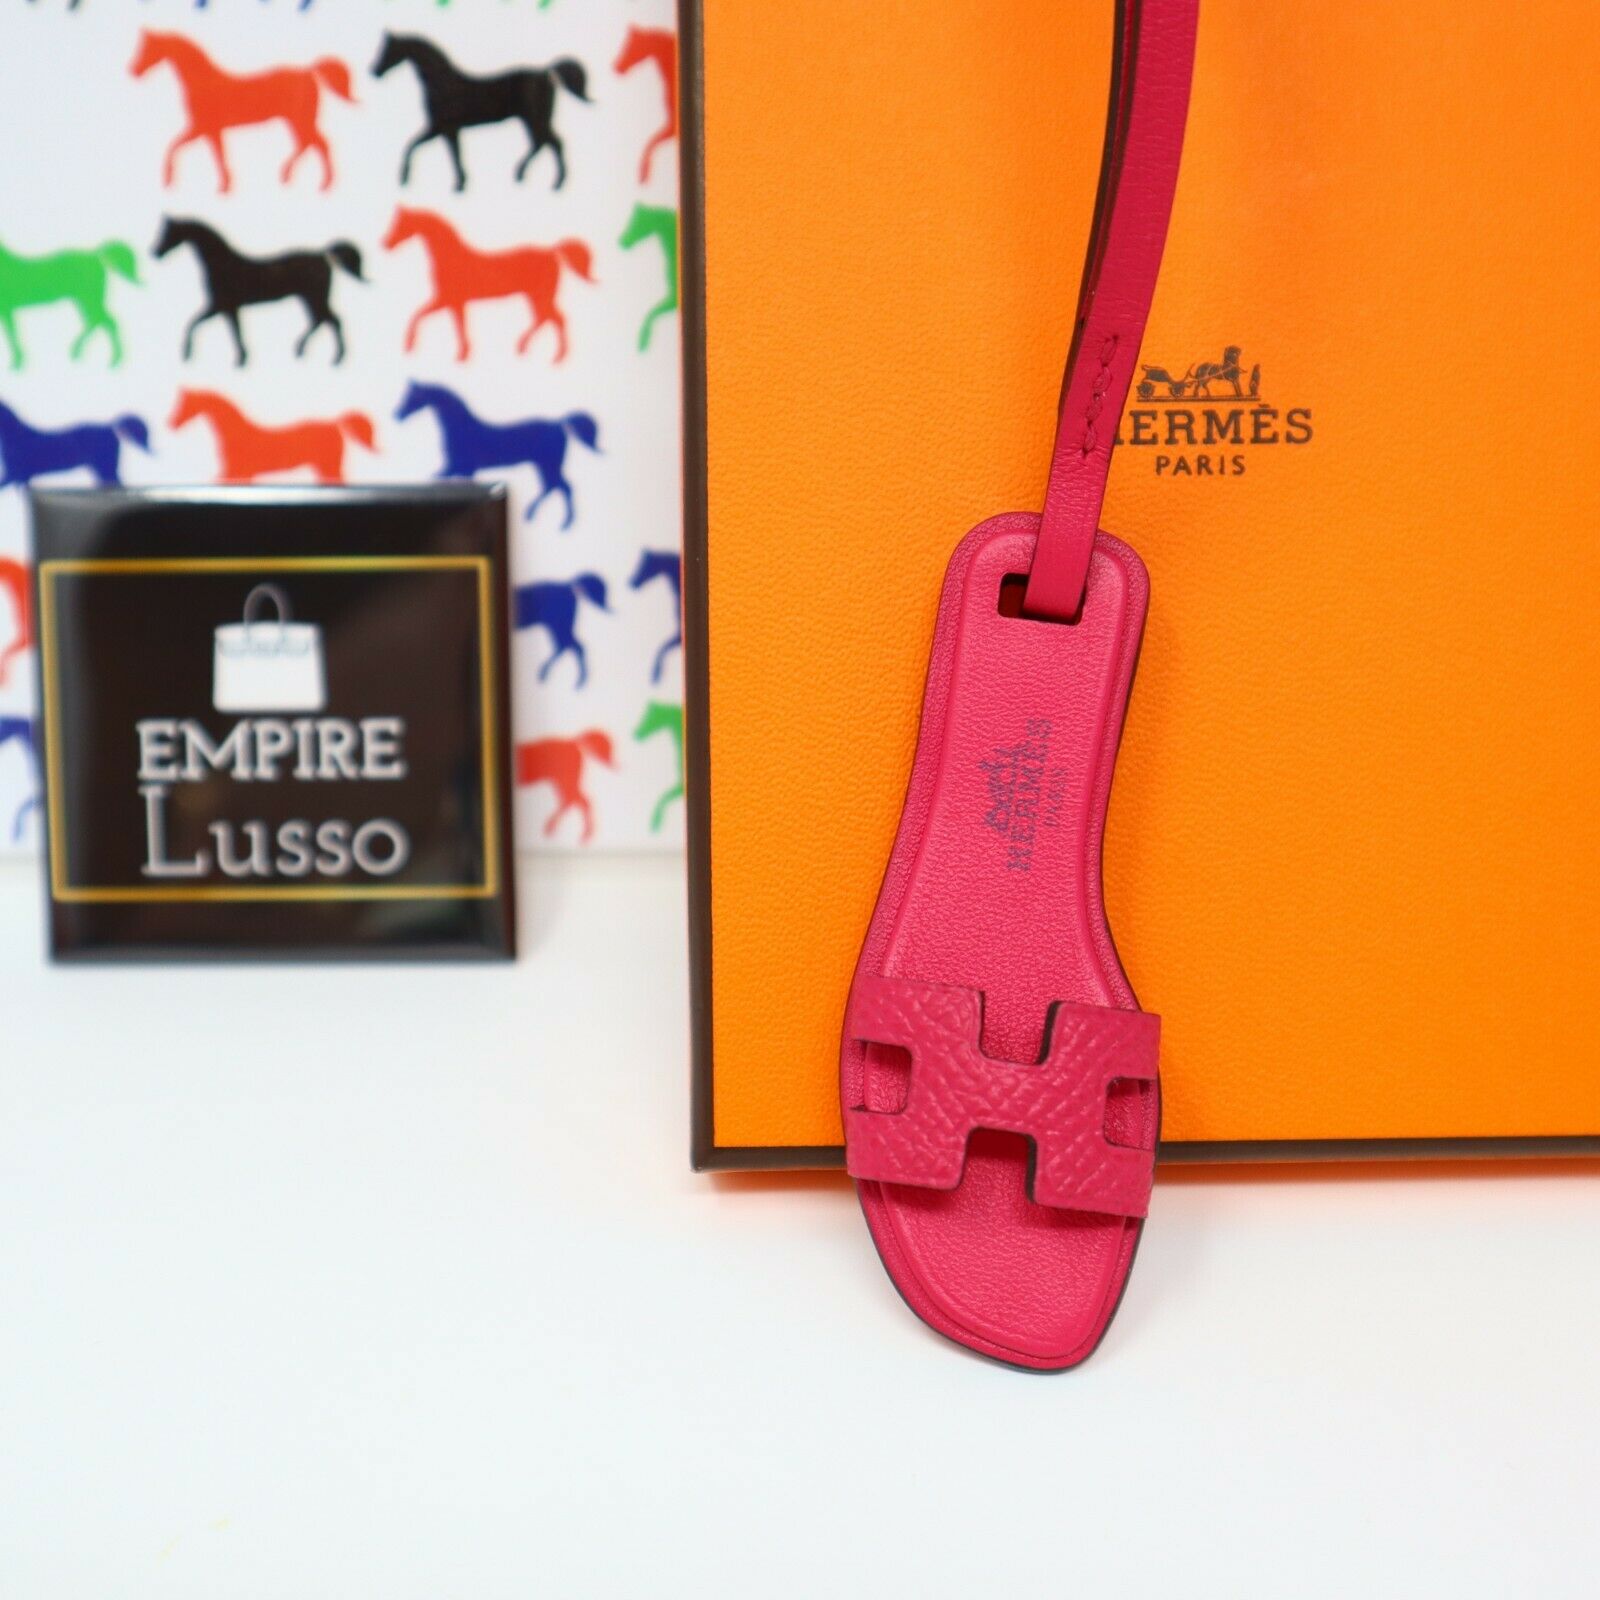 Hermes Oran Sandal Bag Charm